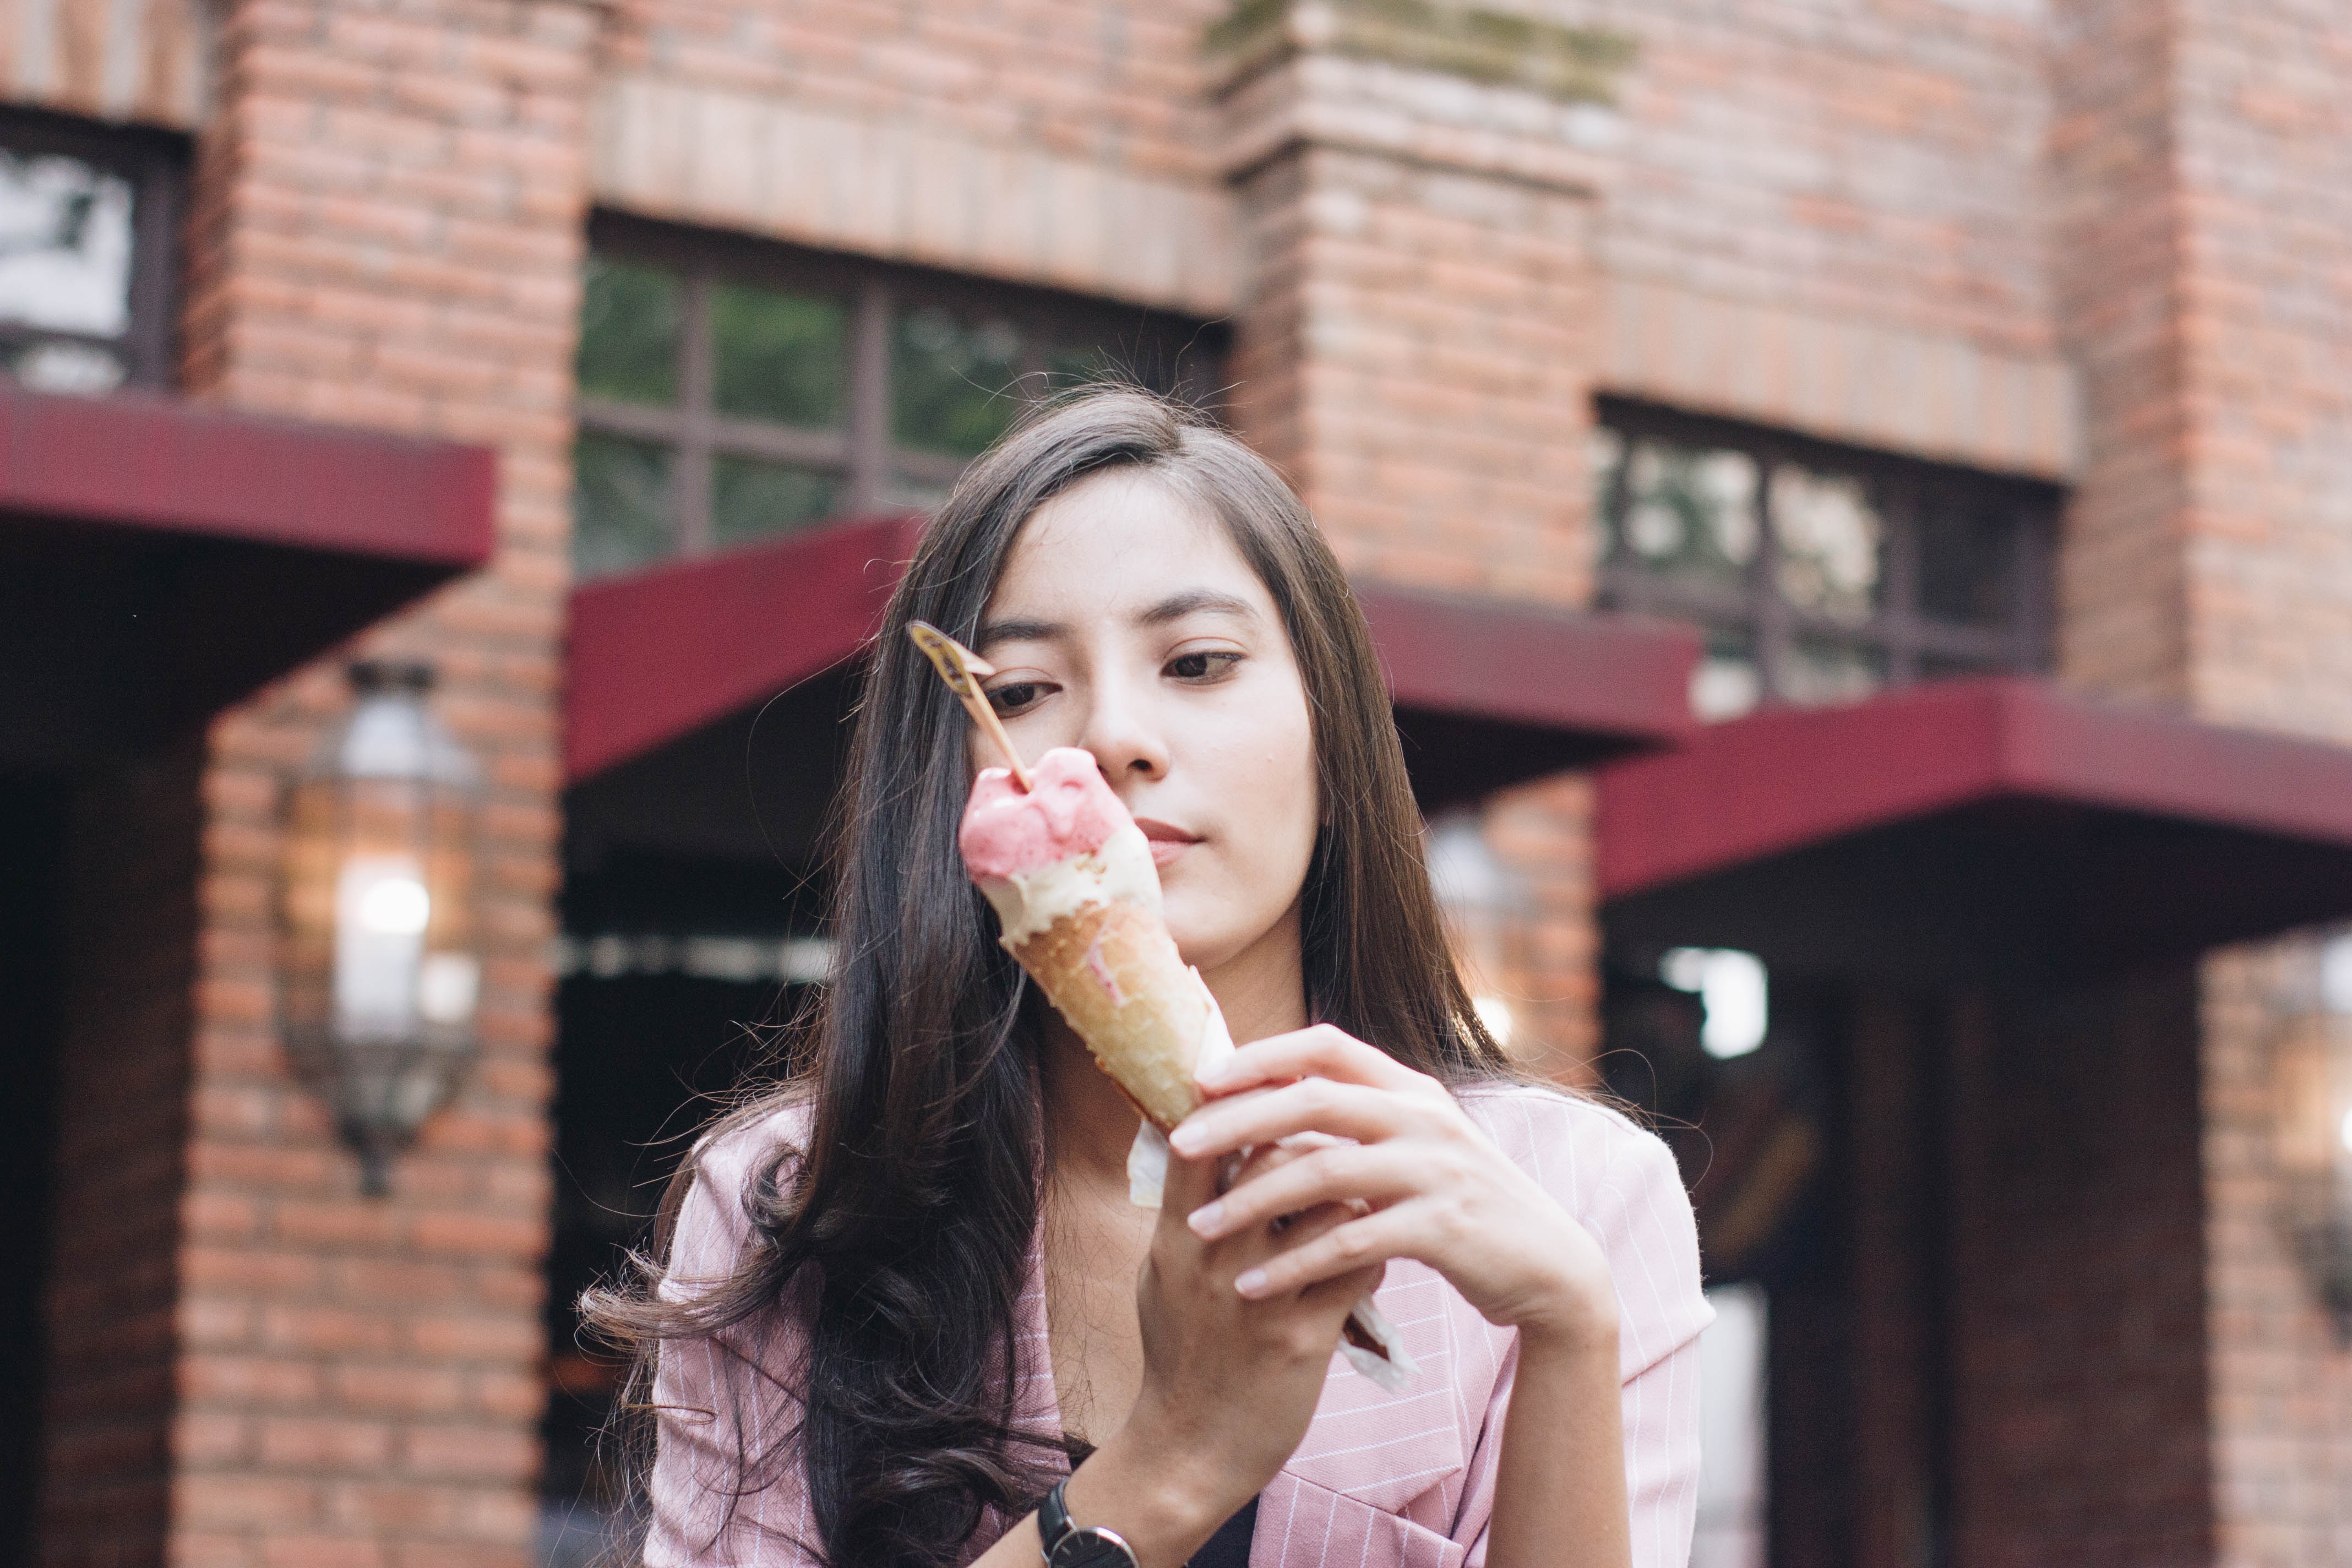 Femme qui regarde son cornet de crème glacée